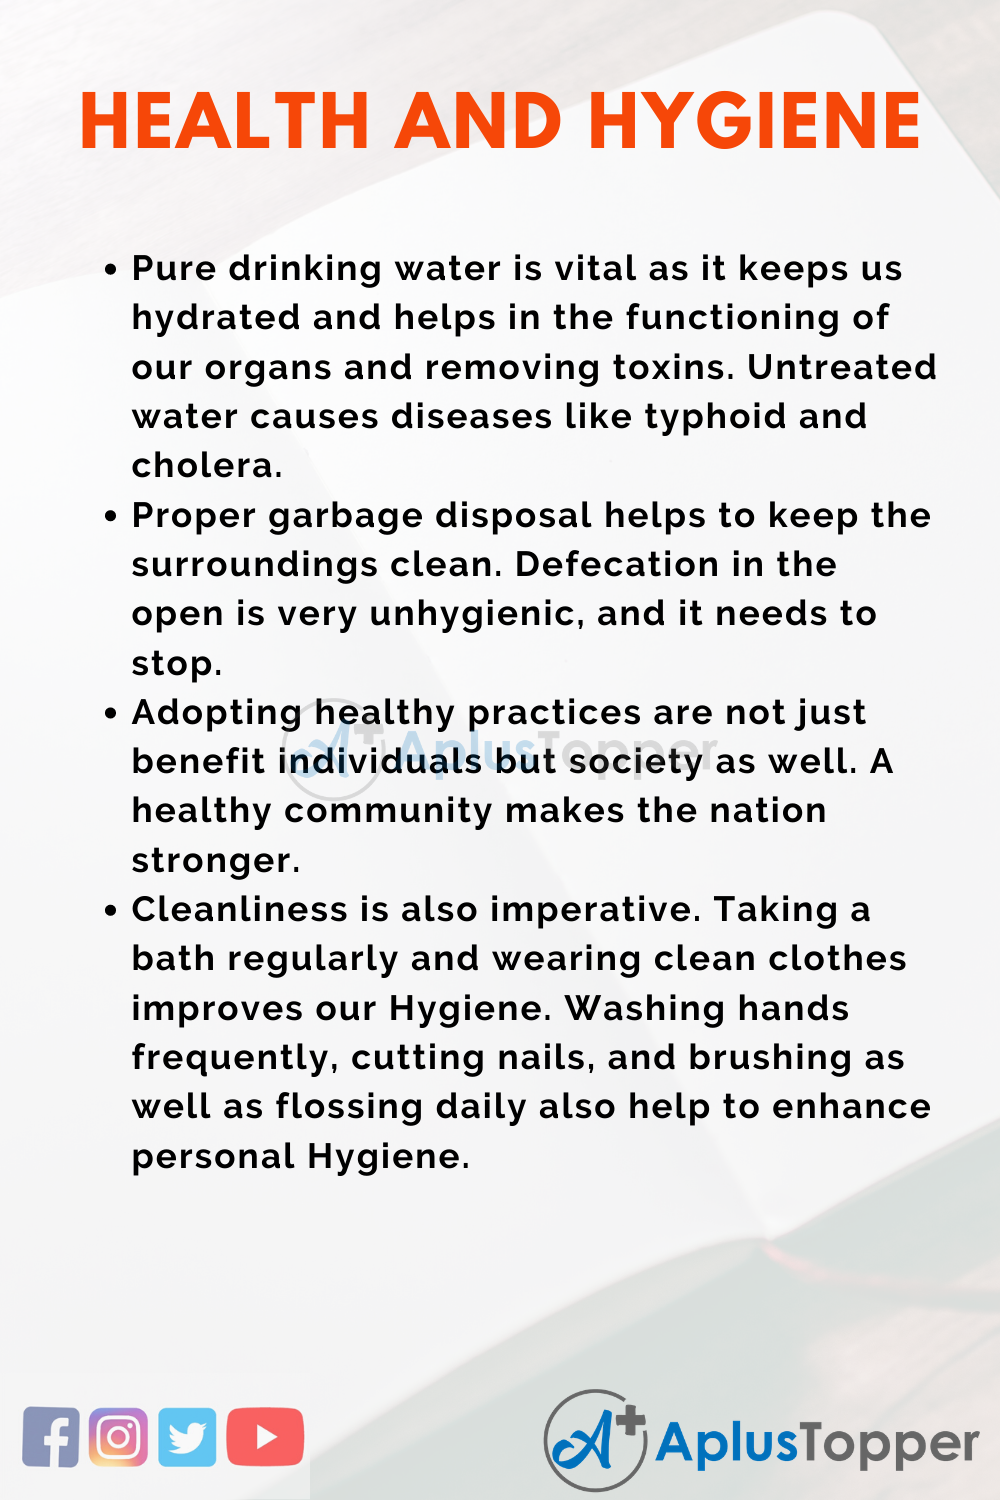 essay on proper hygiene